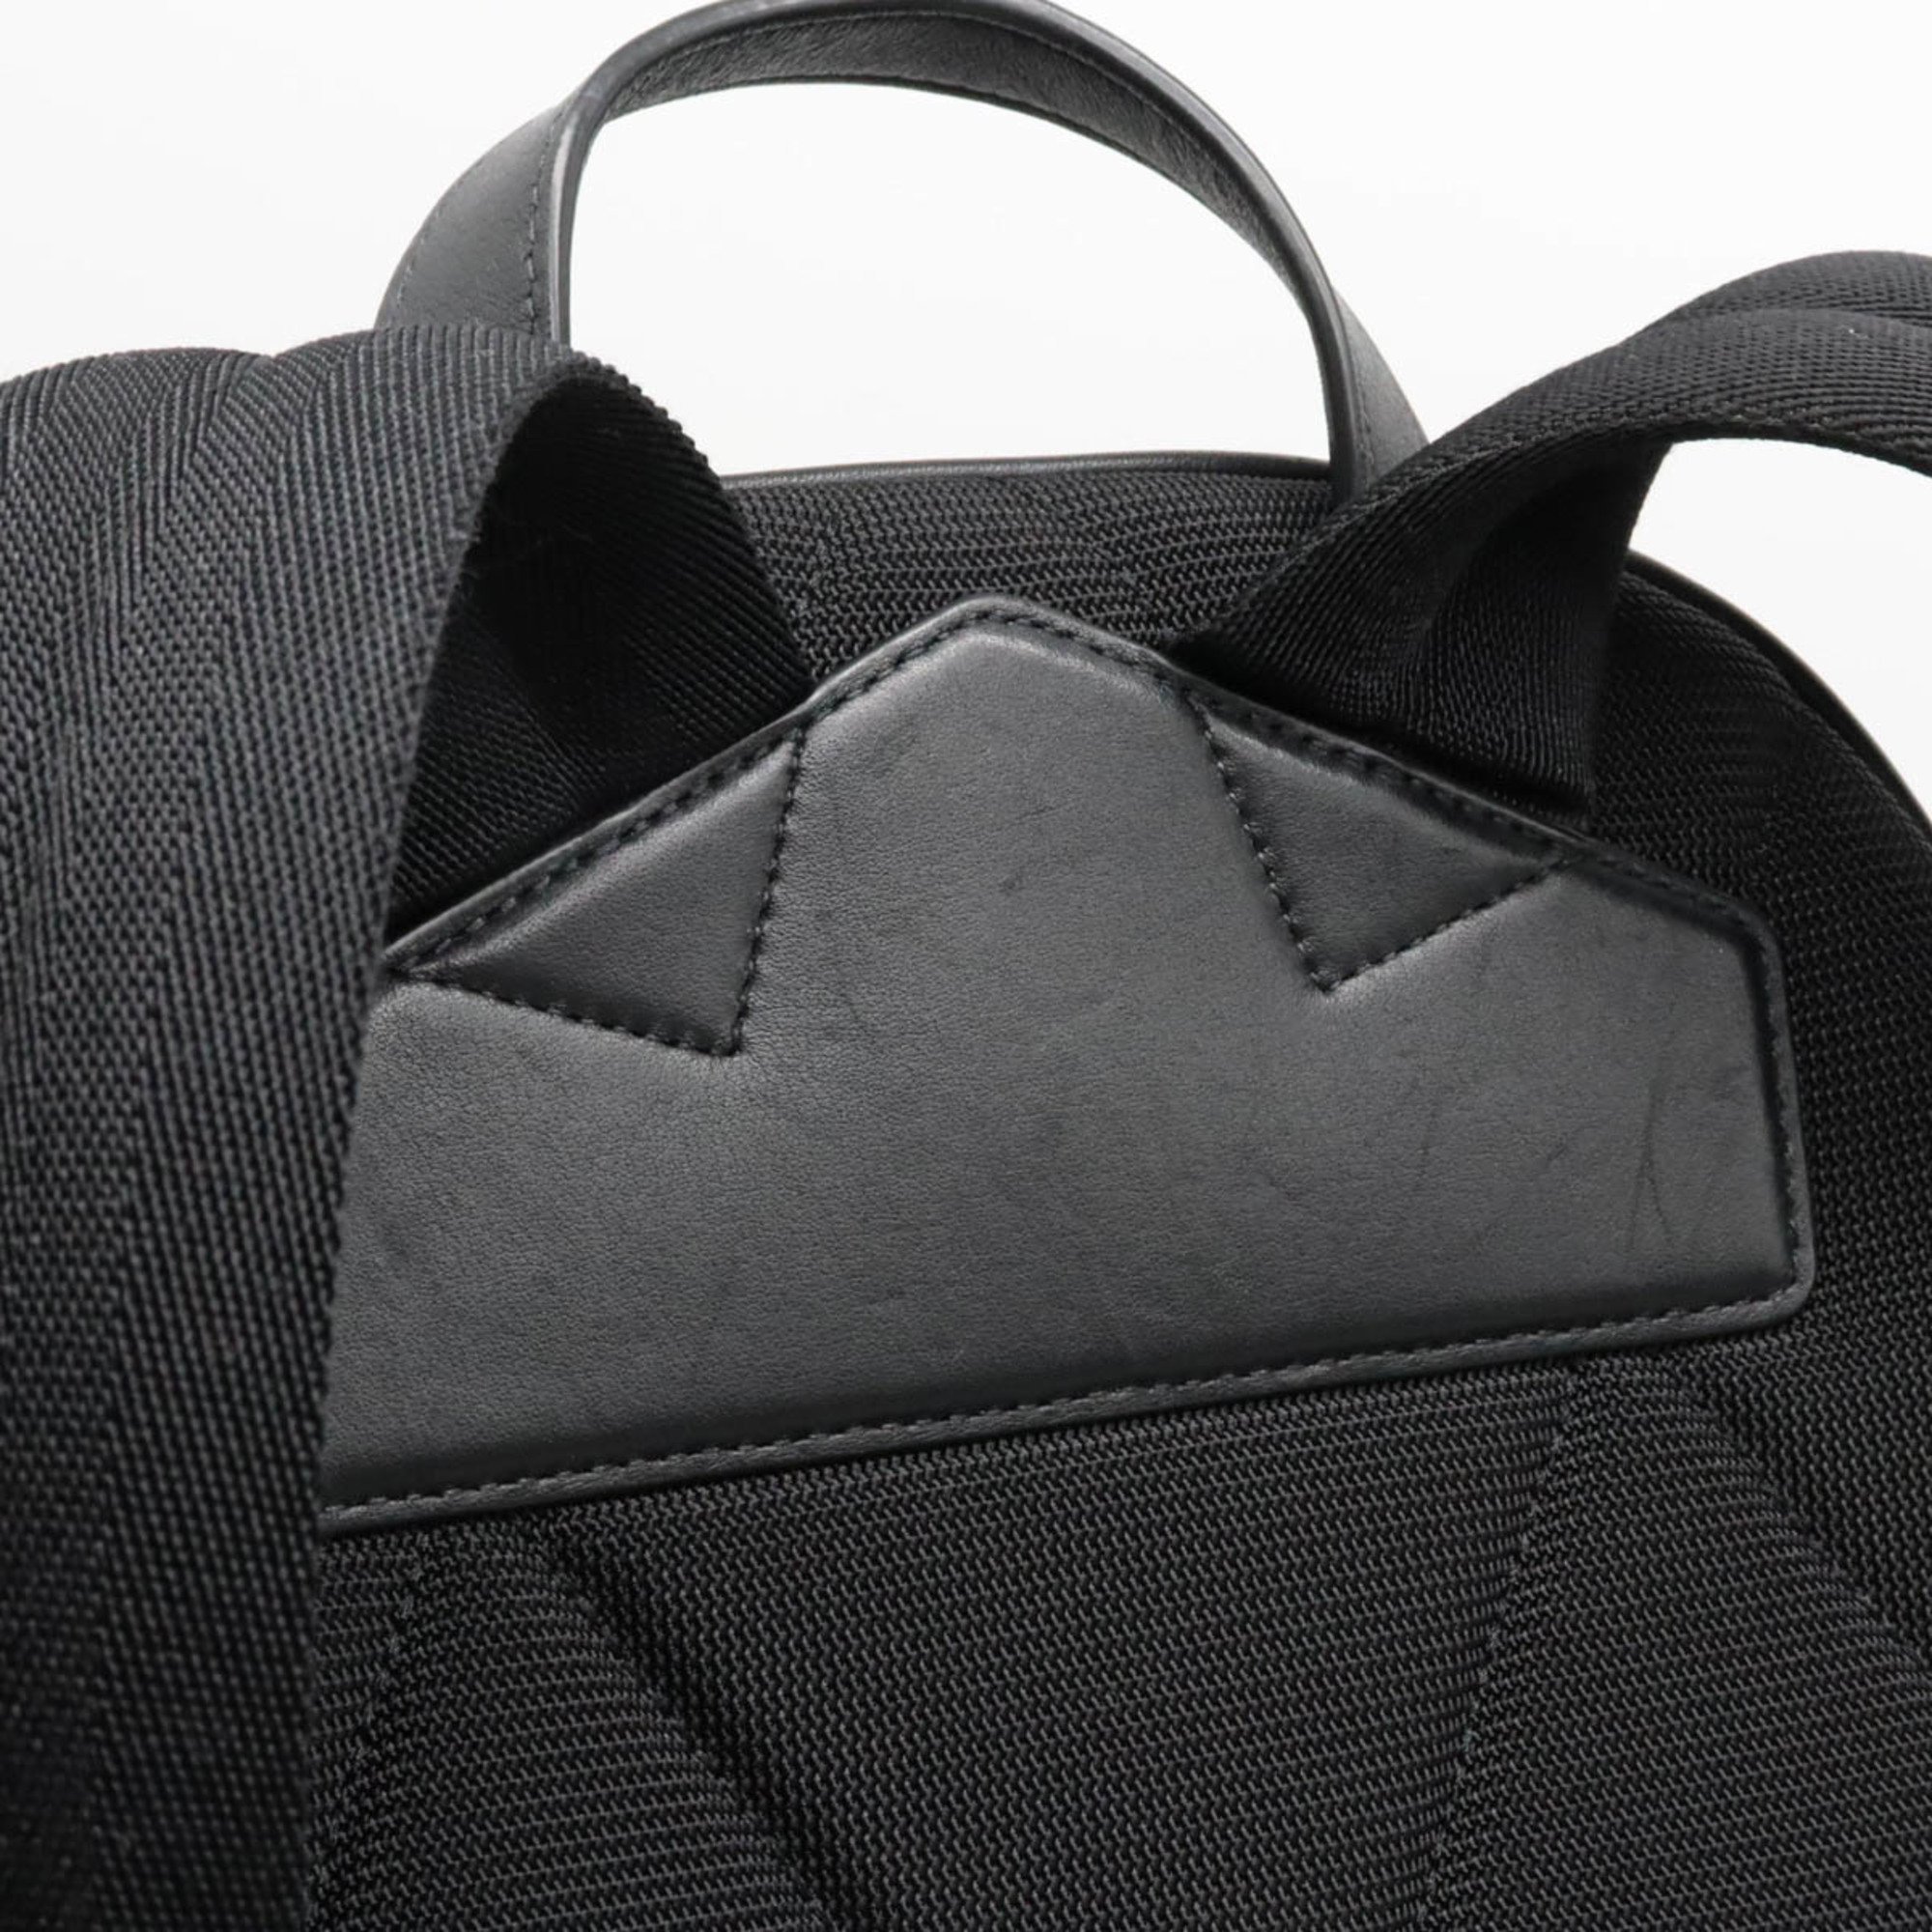 BURBERRY London Check Backpack Rucksack Shoulder Bag PVC Leather Gray Black 8013988